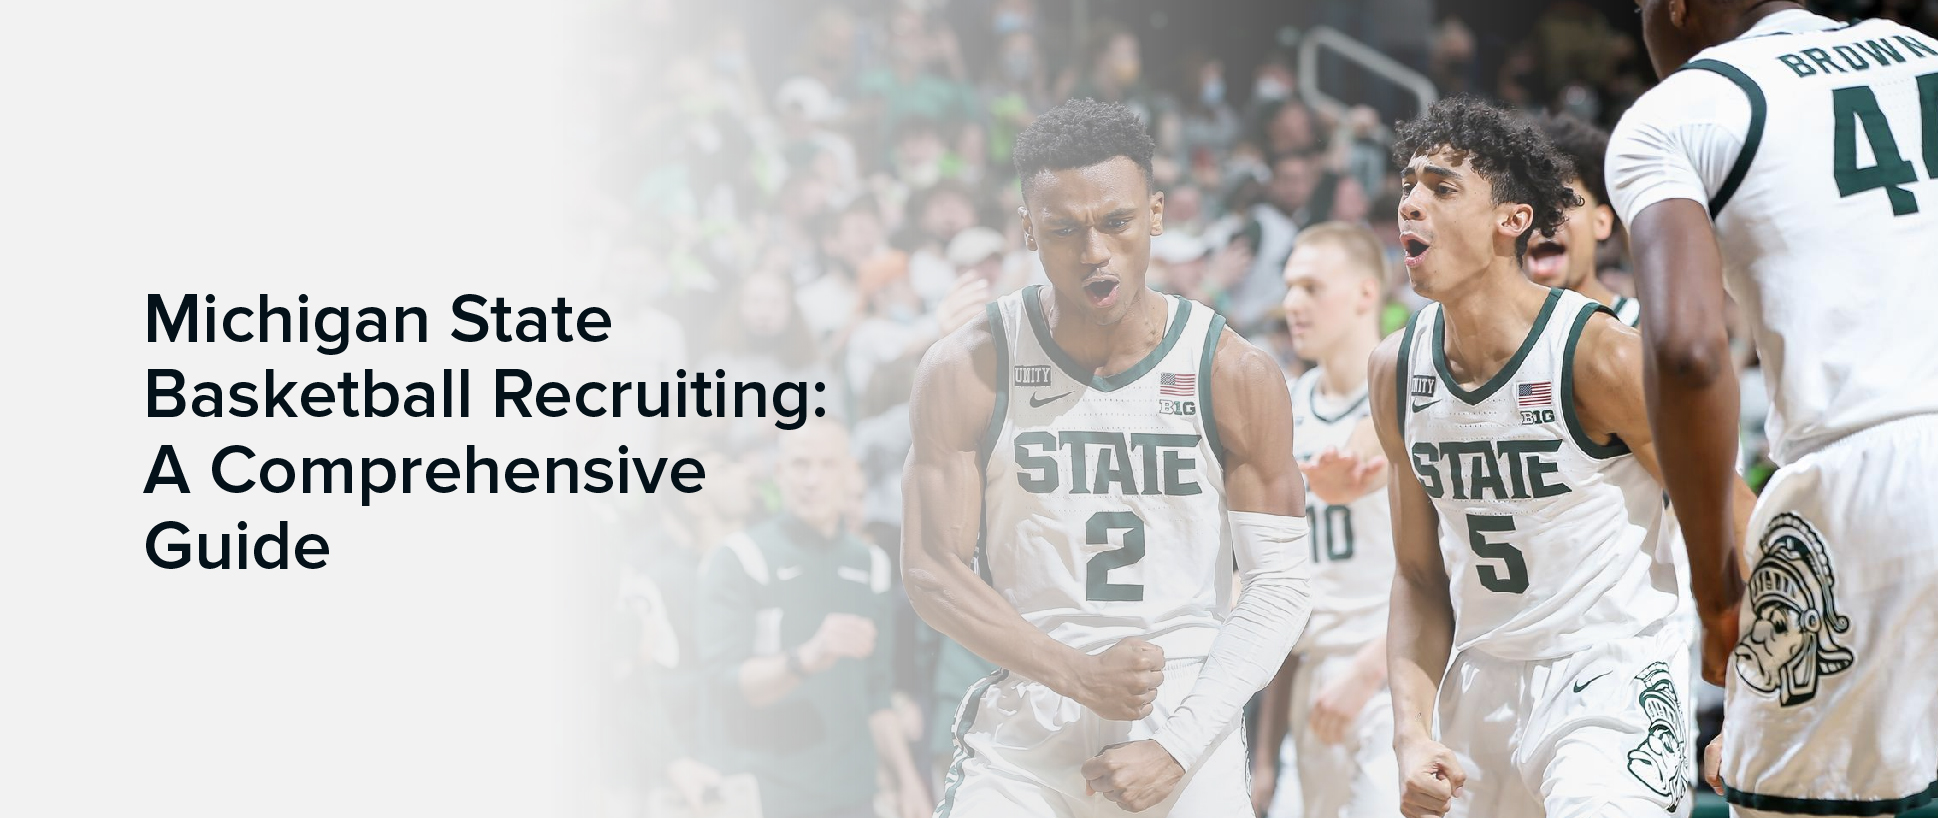 Michigan State Basketball Recruiting: A Comprehensive Guide